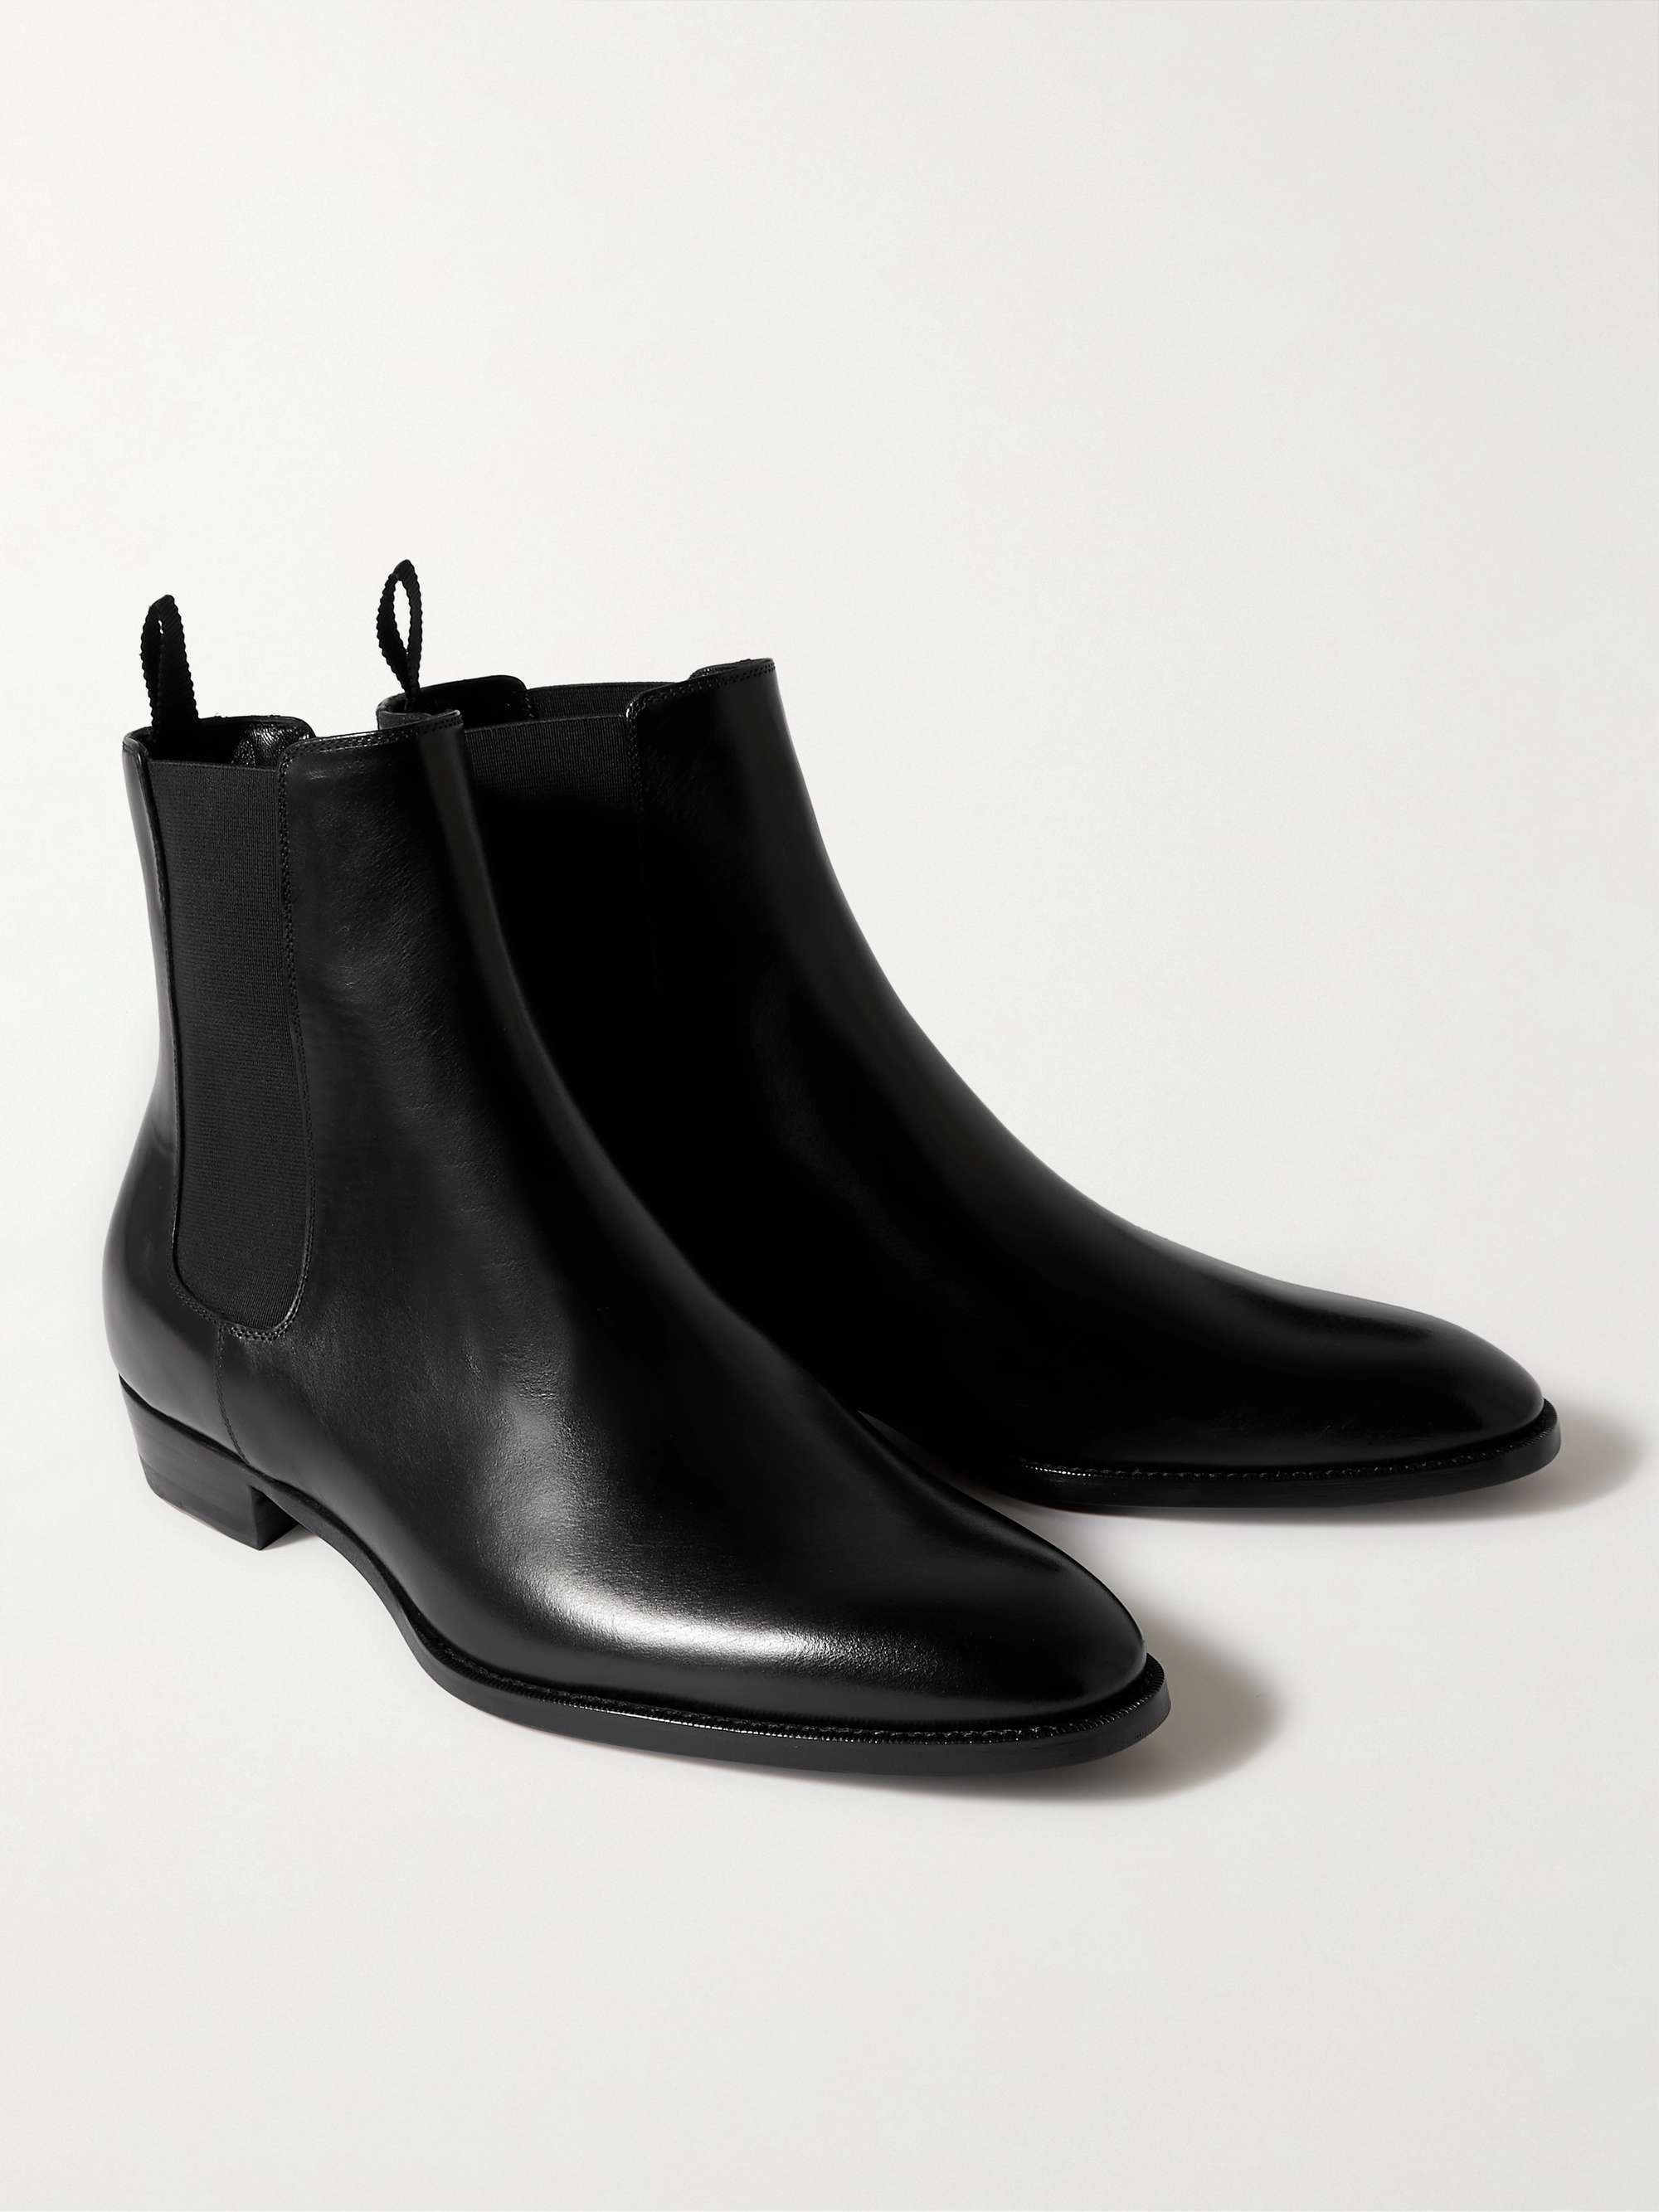 CELINE HOMME Leather Chelsea Boots for Men | MR PORTER